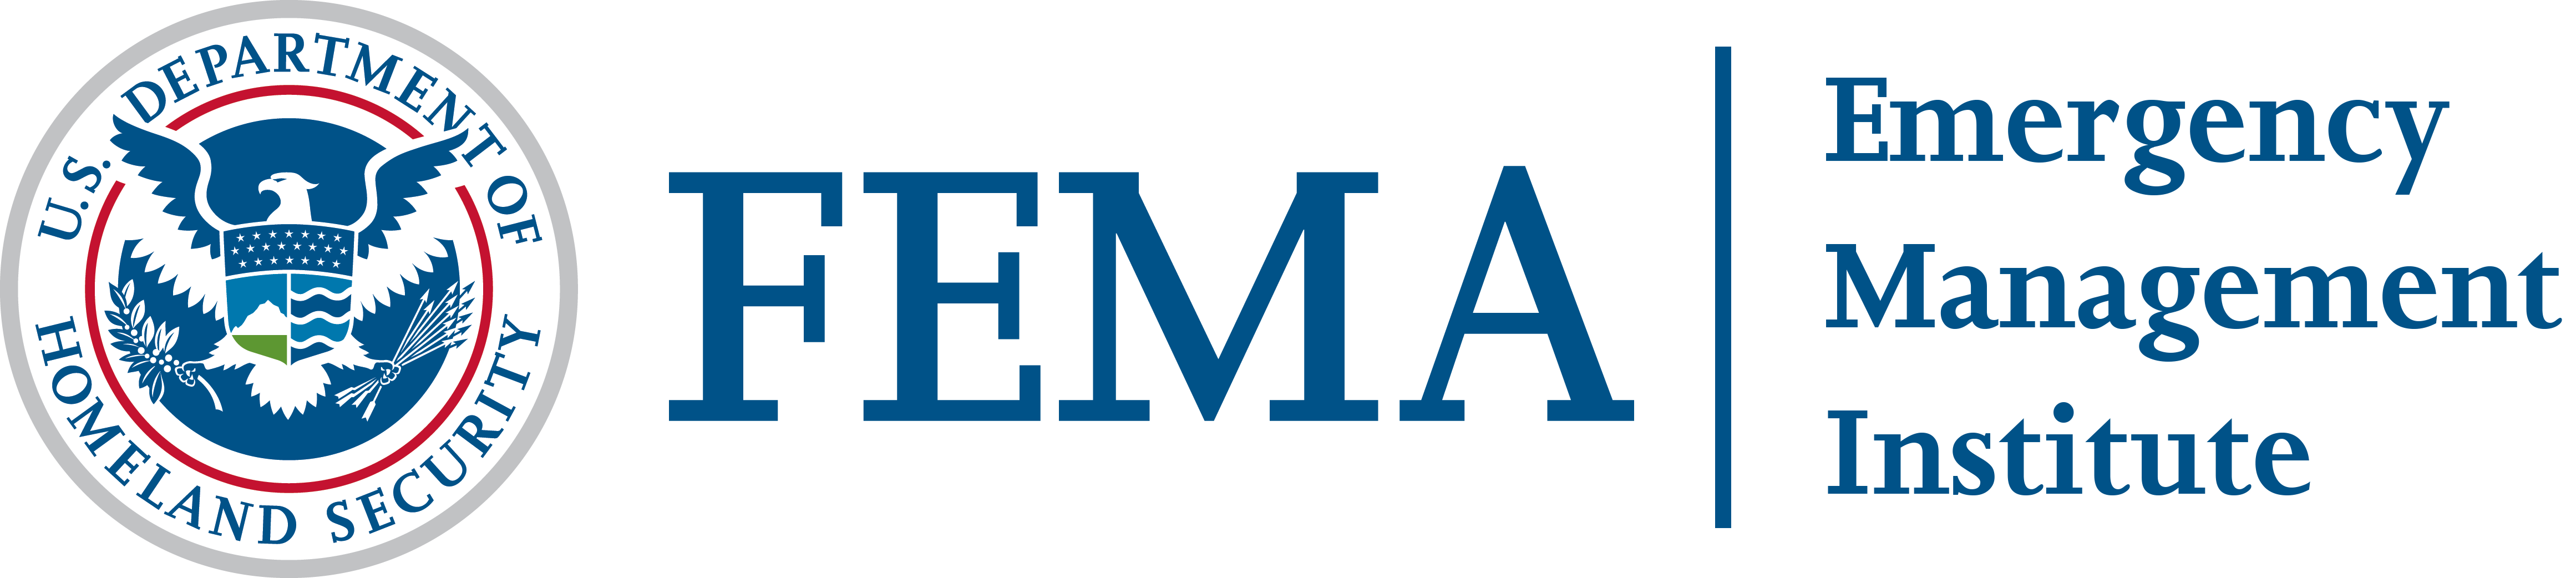 Emergency Management Institute EMI Logo